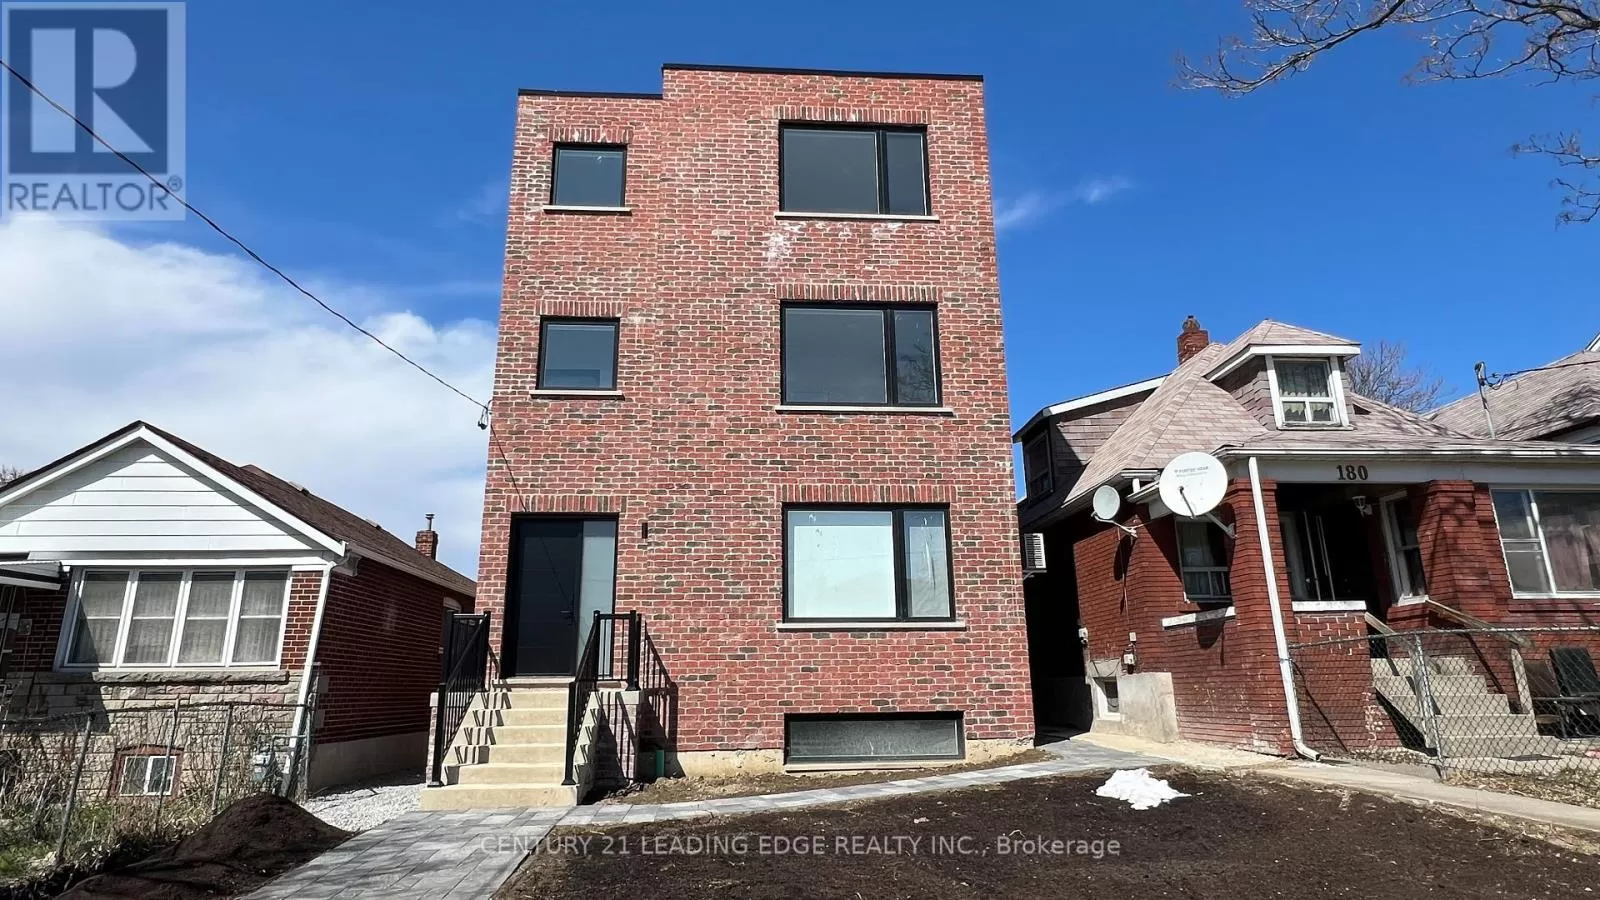 Fourplex for rent: 3 - 182 Cameron Avenue, Toronto, Ontario M6M 1R7